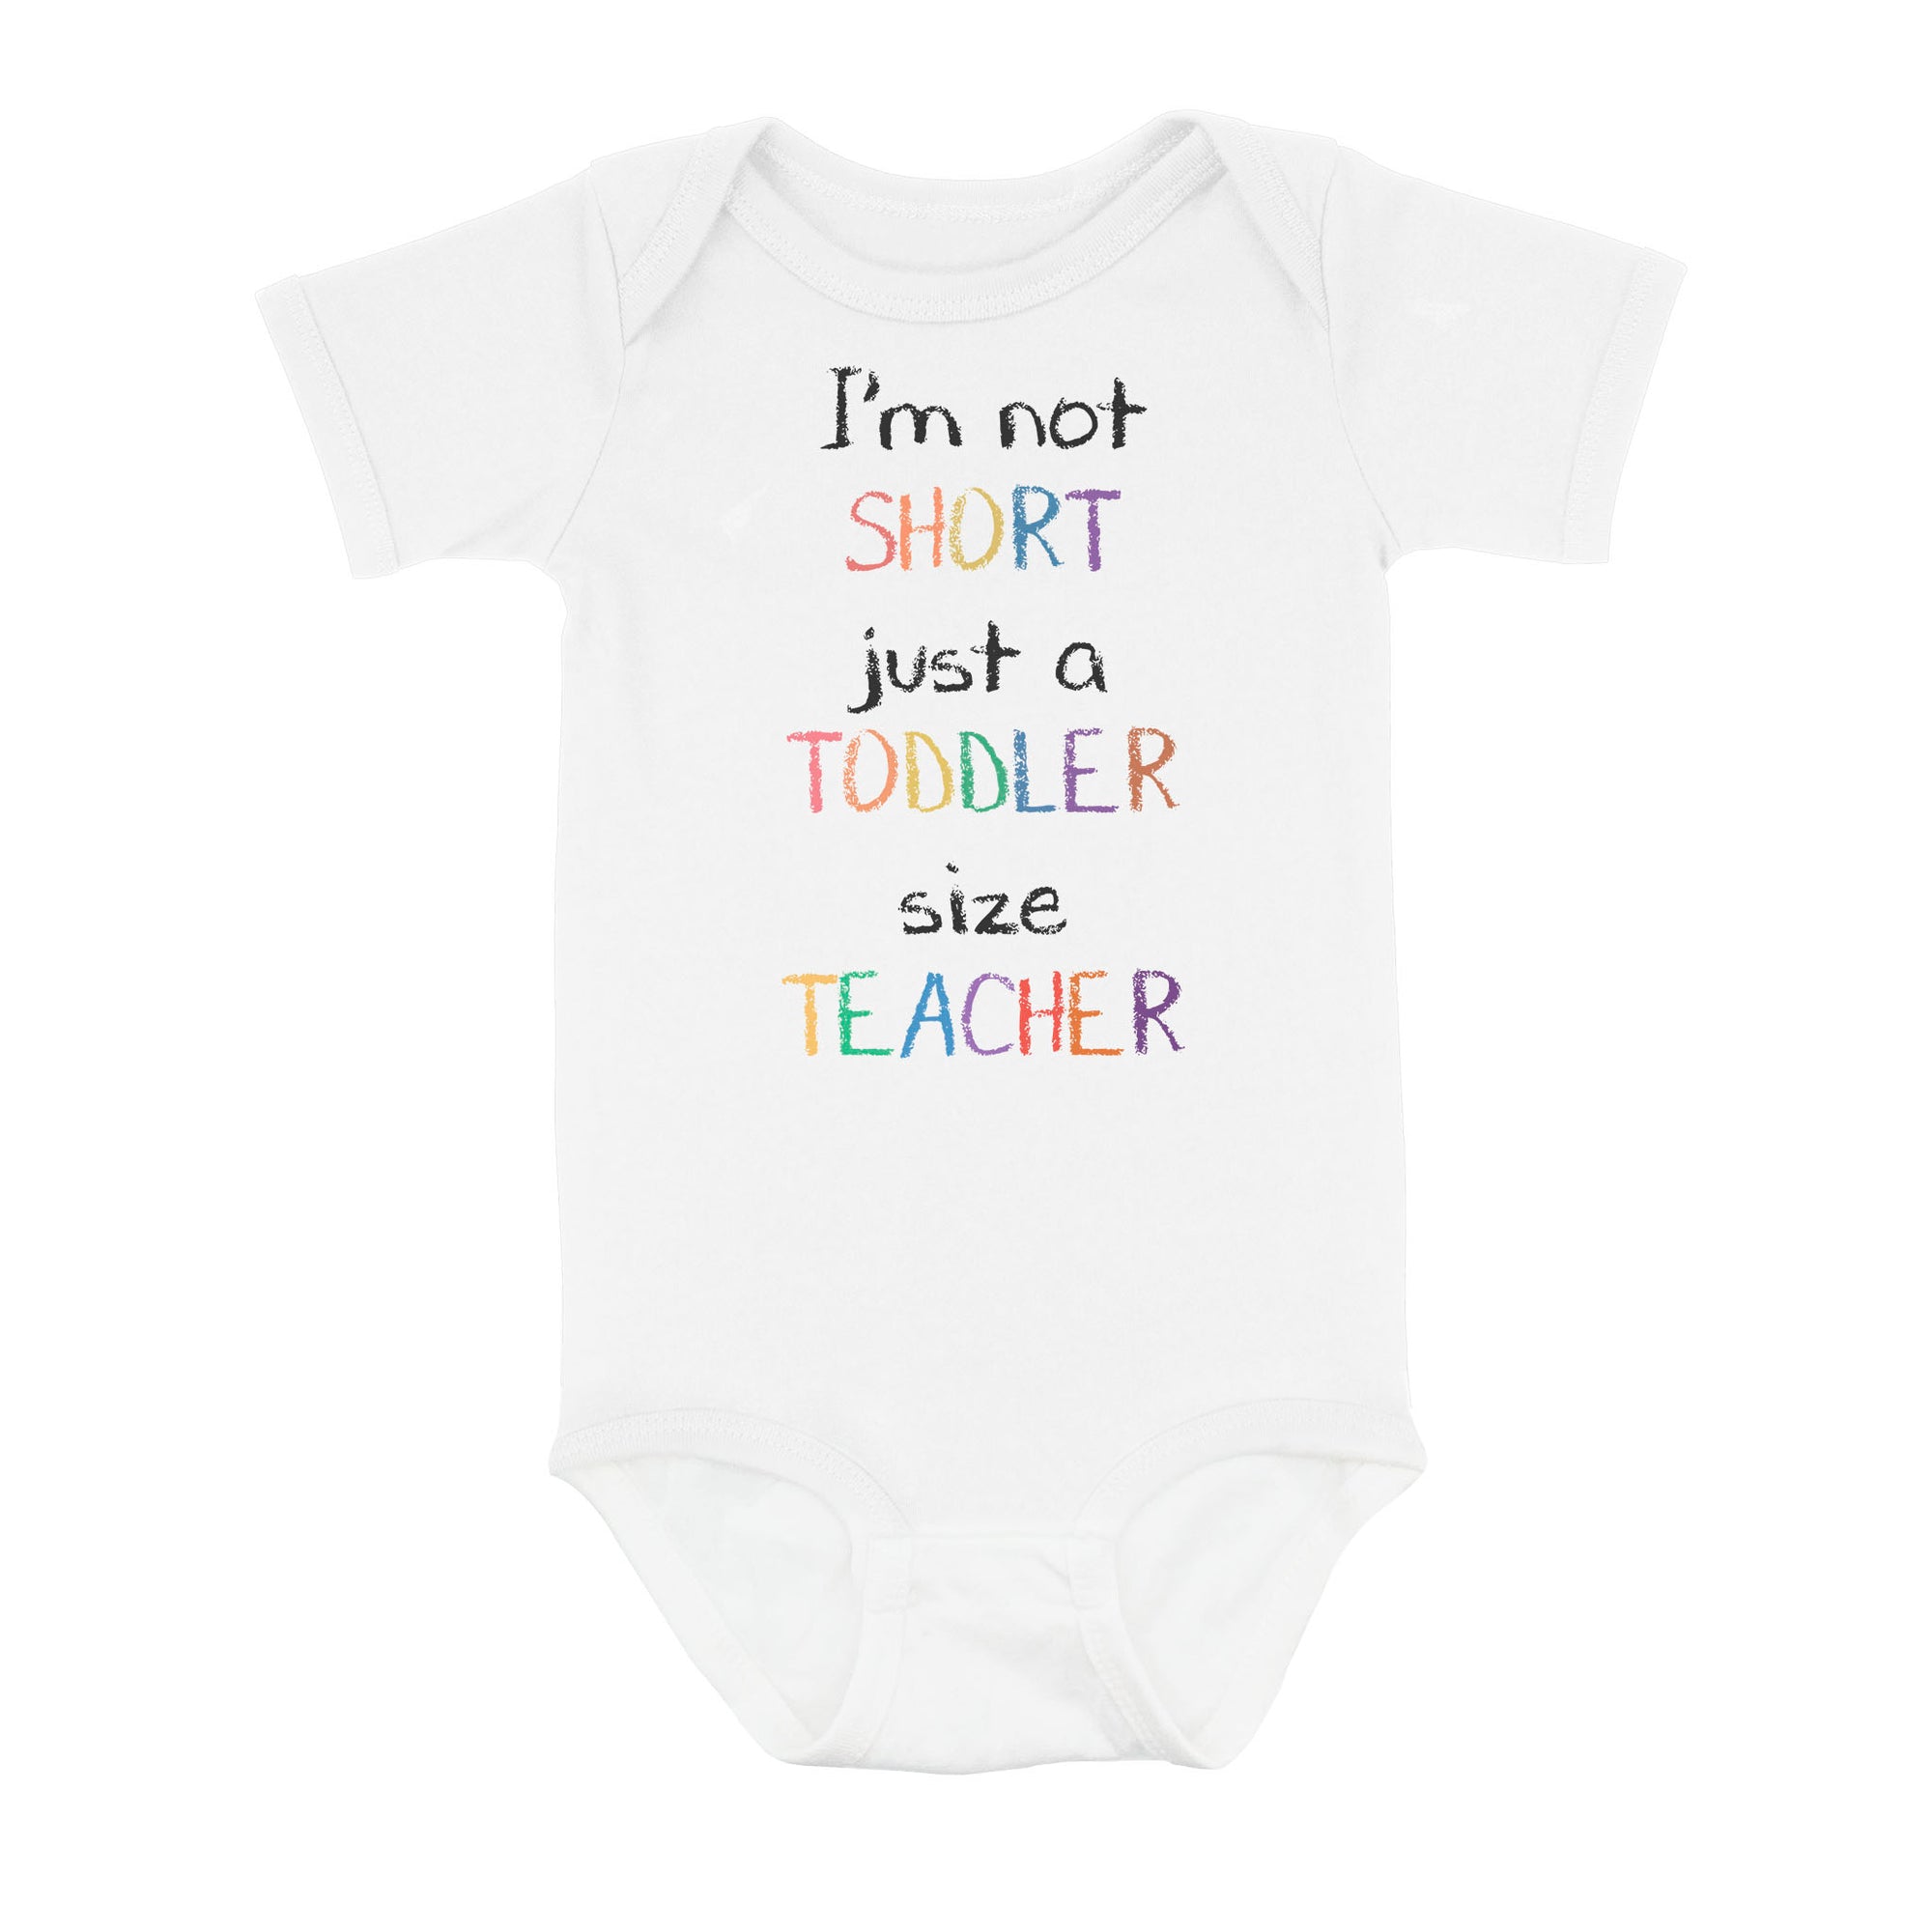 I’m Not Short Just A Toddler Size Teacher - Baby Onesie